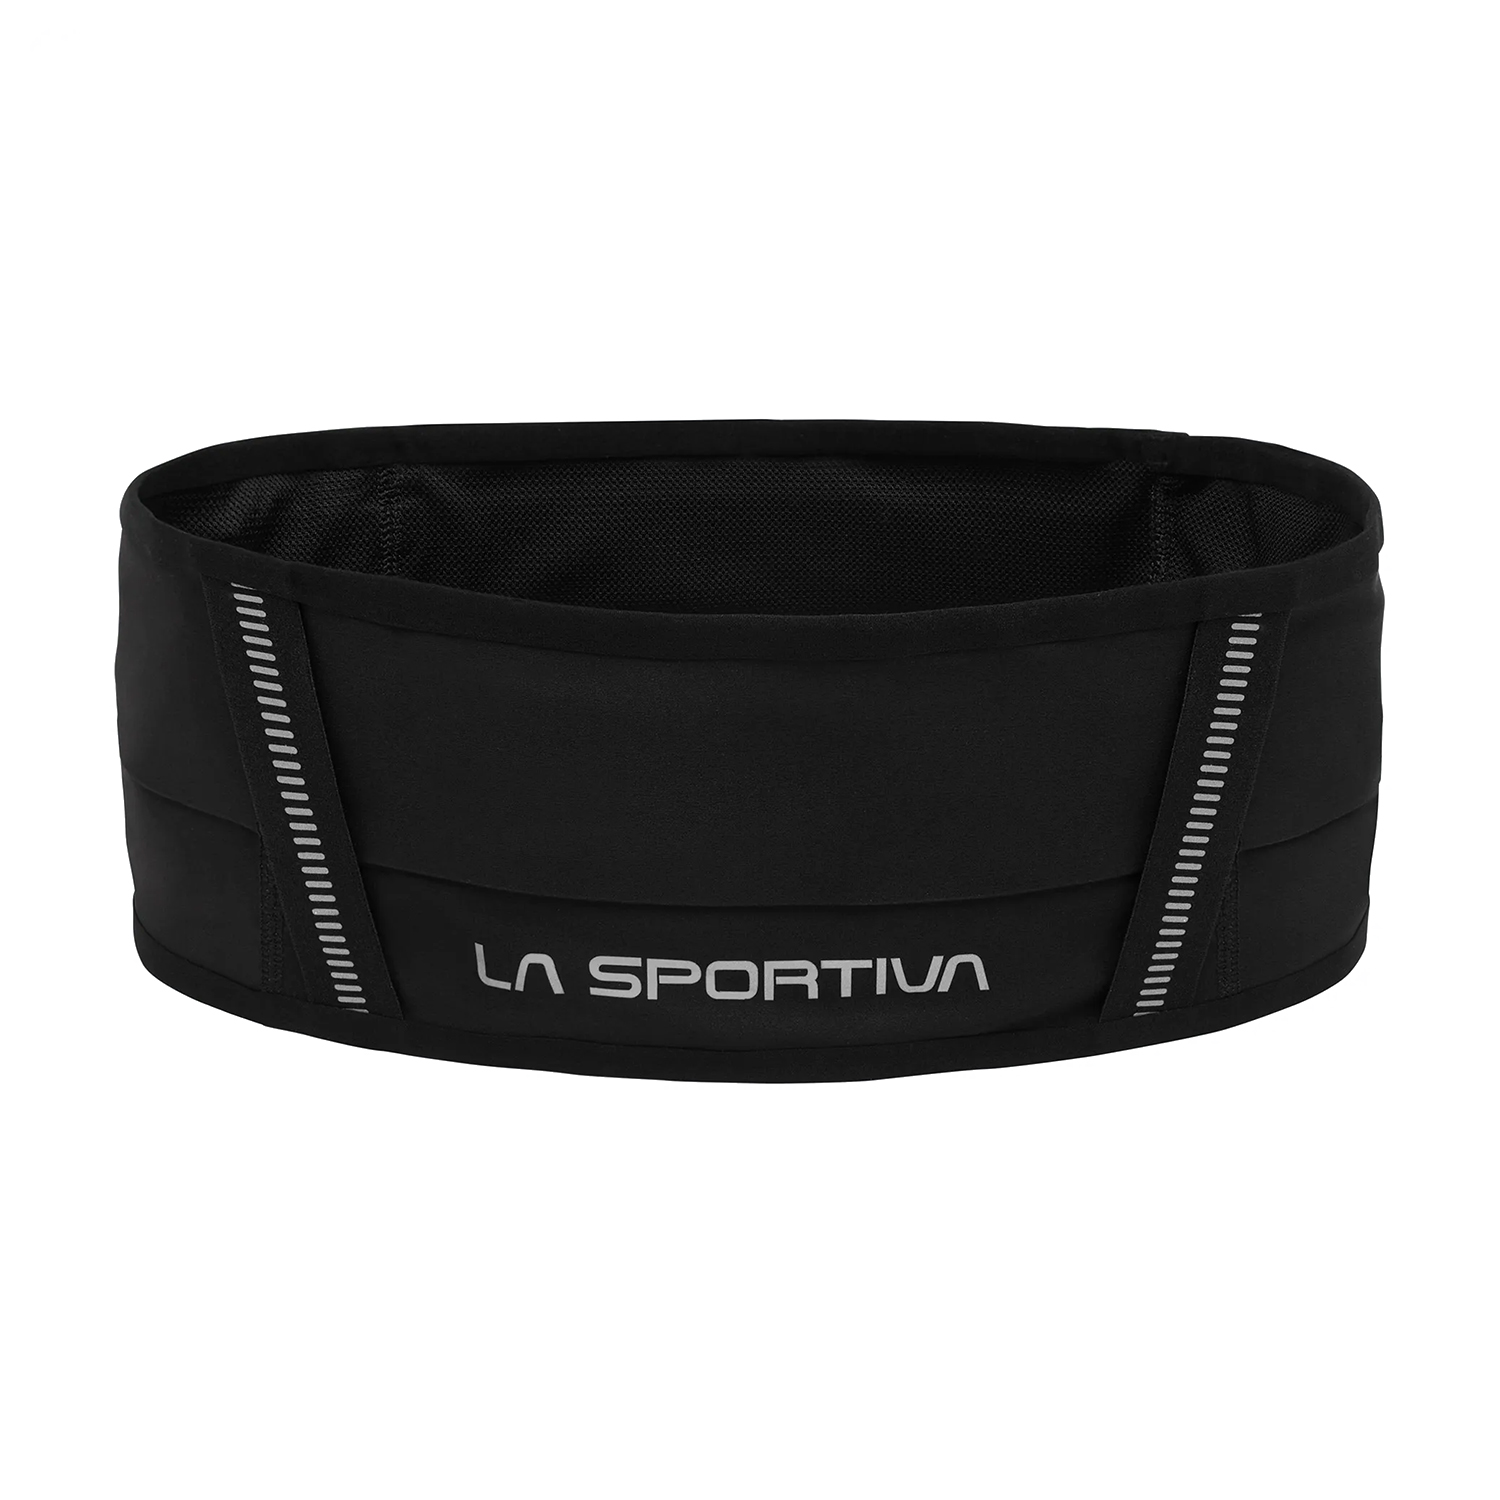 La Sportiva Run Cintura - Black